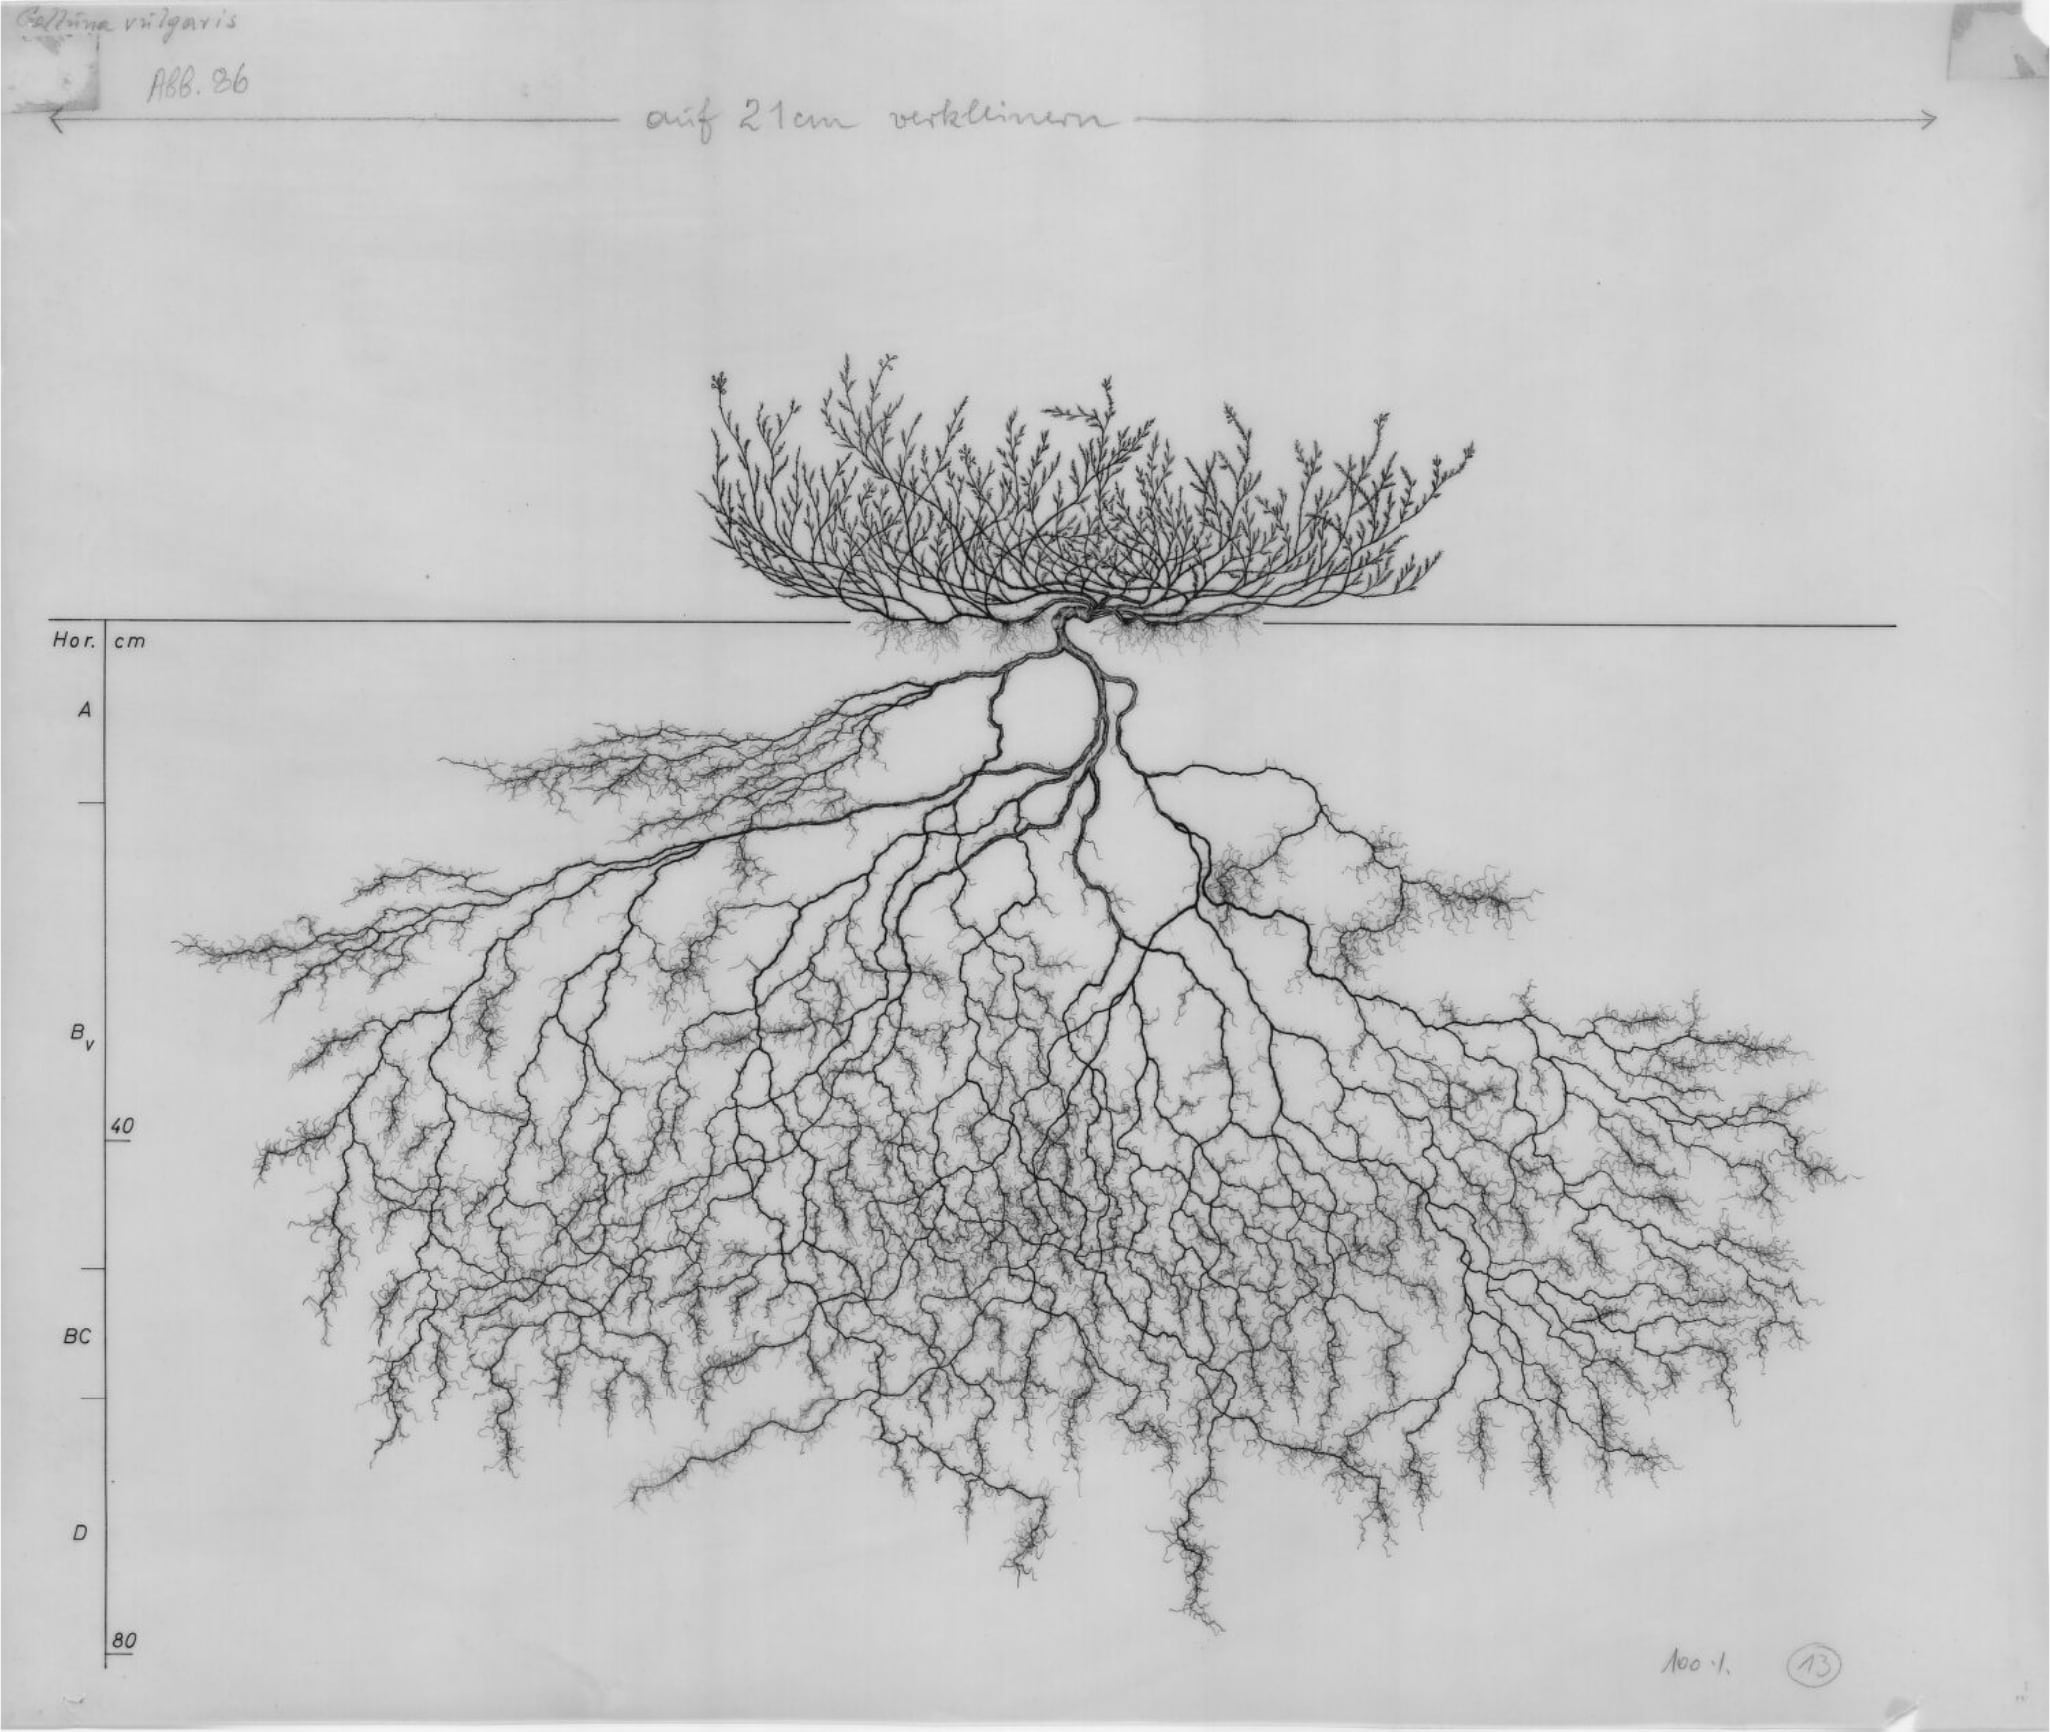 tree roots underground diagram